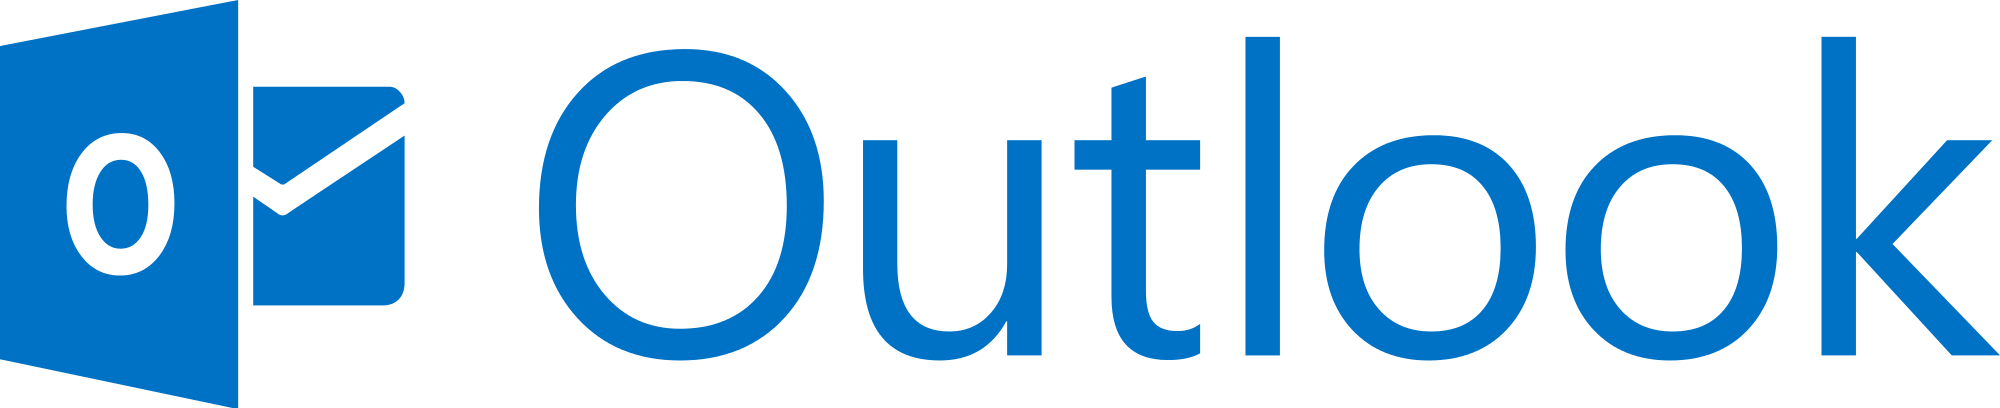 Outlook Email Logo - Outlook Logos